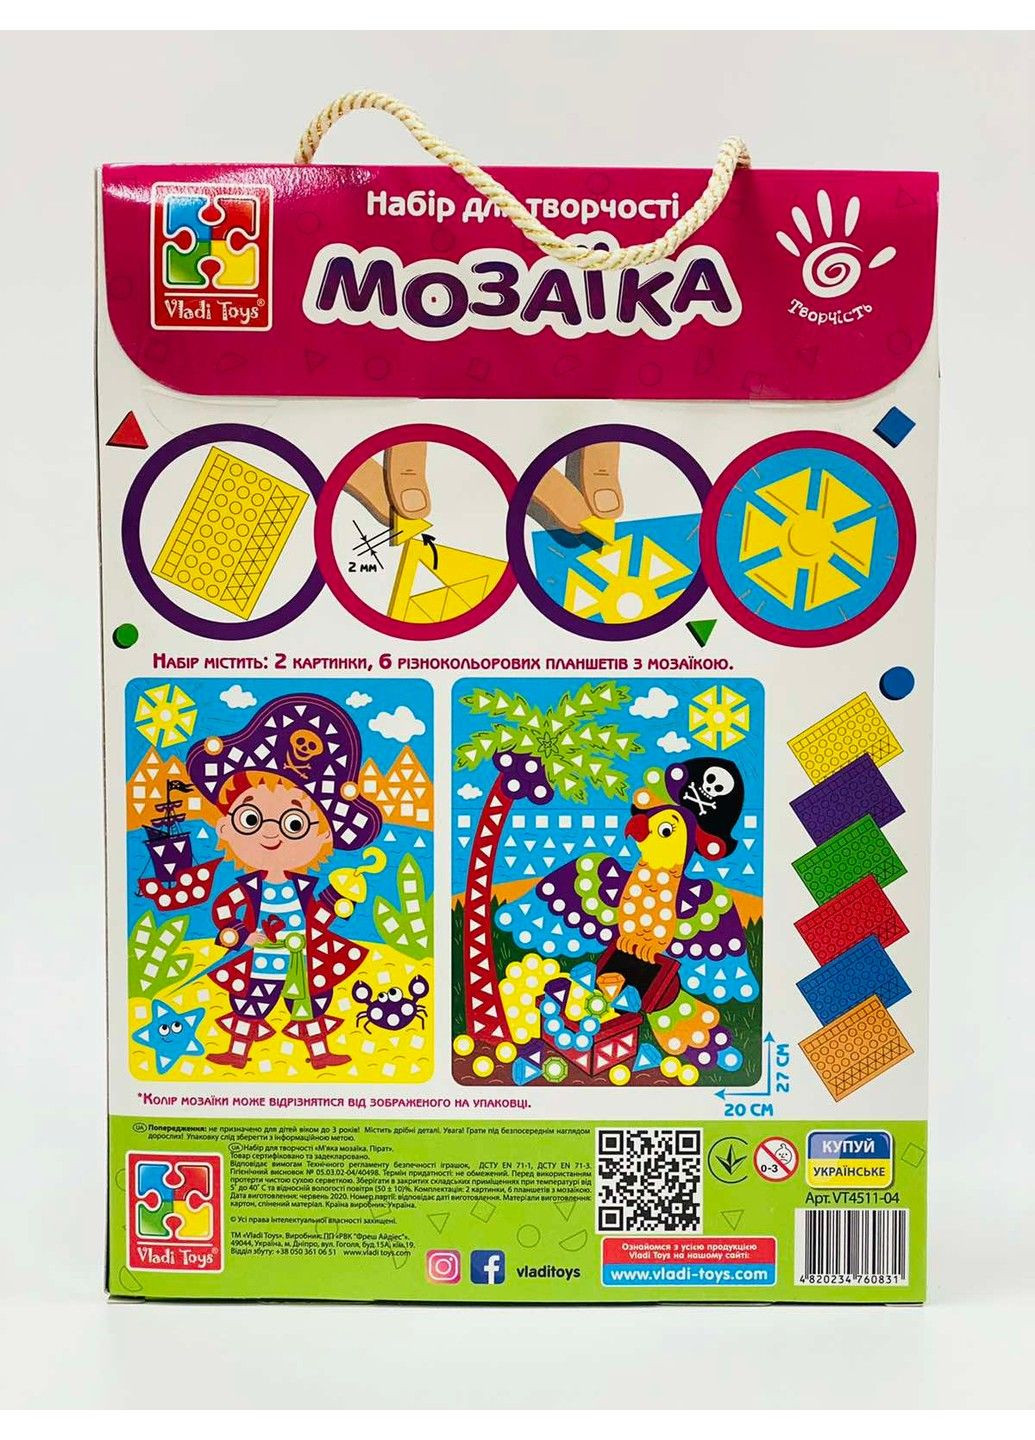 Набор для творчества "Мягкая фигурная мозаика. Пират" VT 4511-04 Vladi toys (297003096)